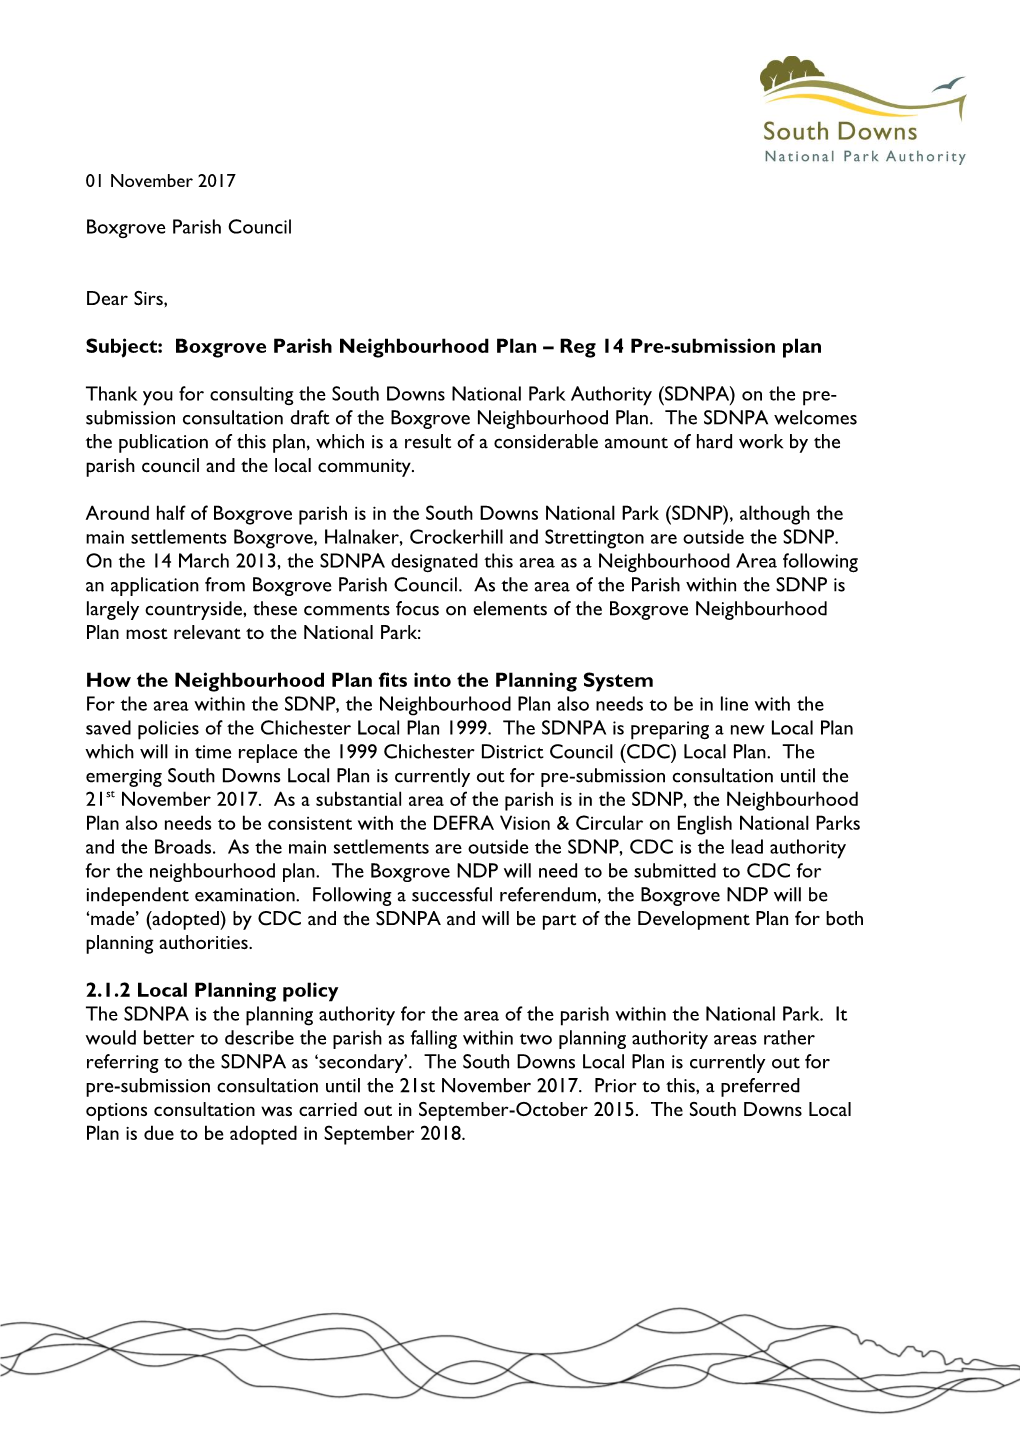 Boxgrove Parish Neighbourhood Plan – Reg 14 Pre-Submission Plan